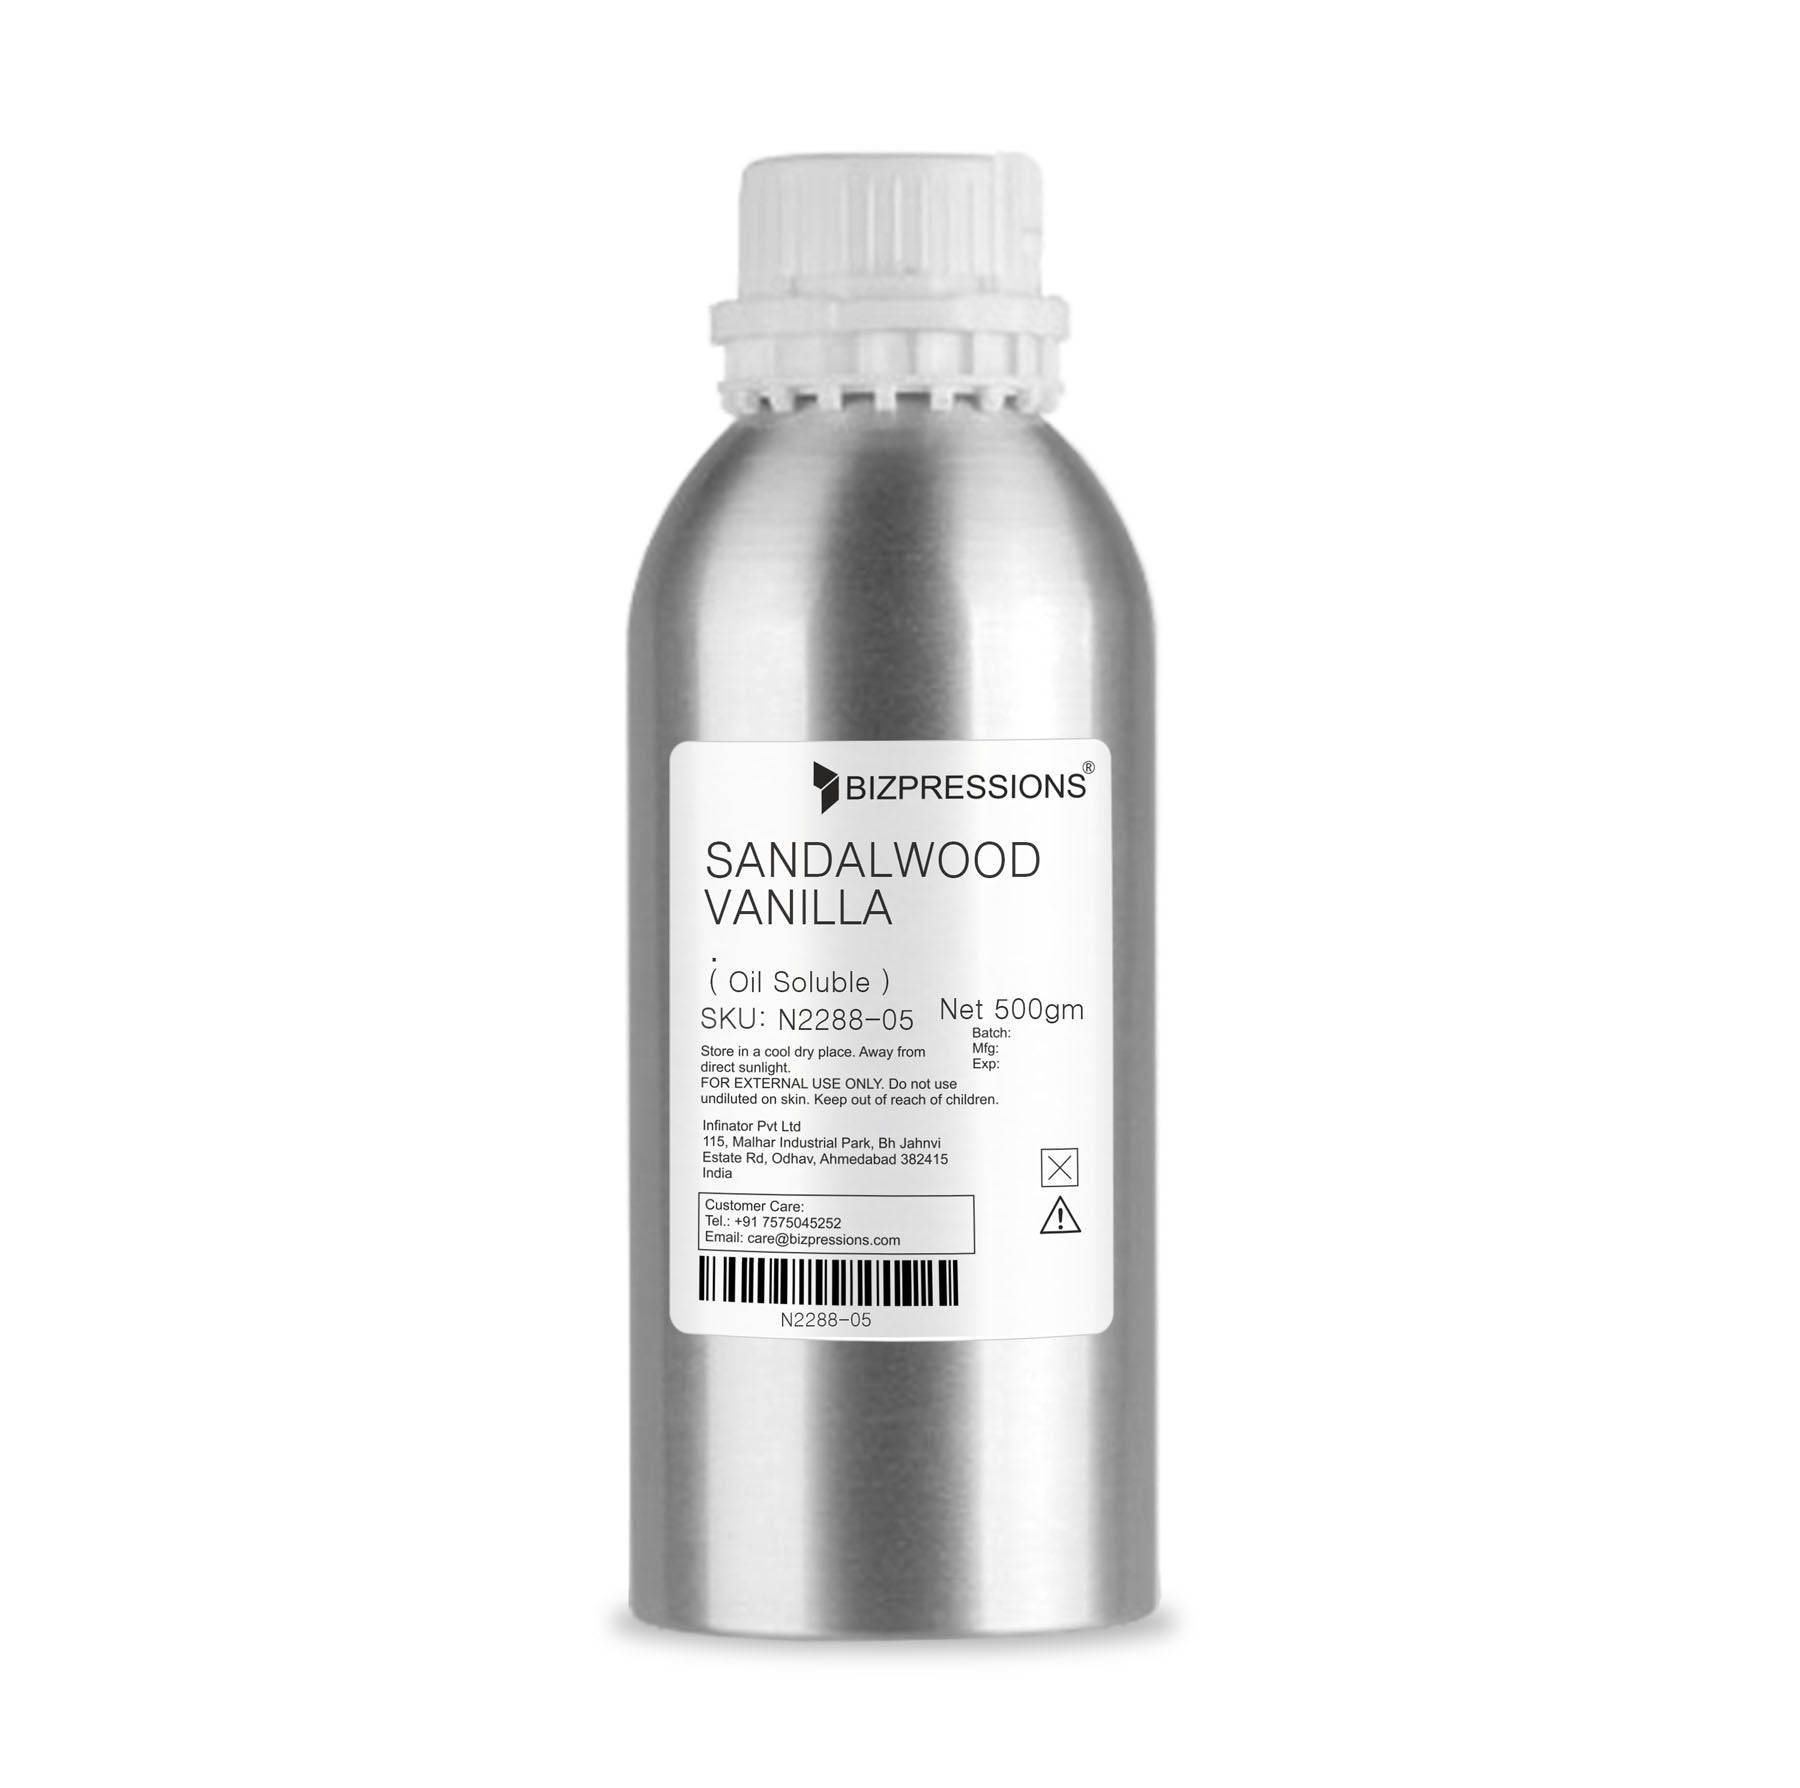 SANDALWOOD VANILLA - Fragrance ( Oil Soluble ) - 500 gm